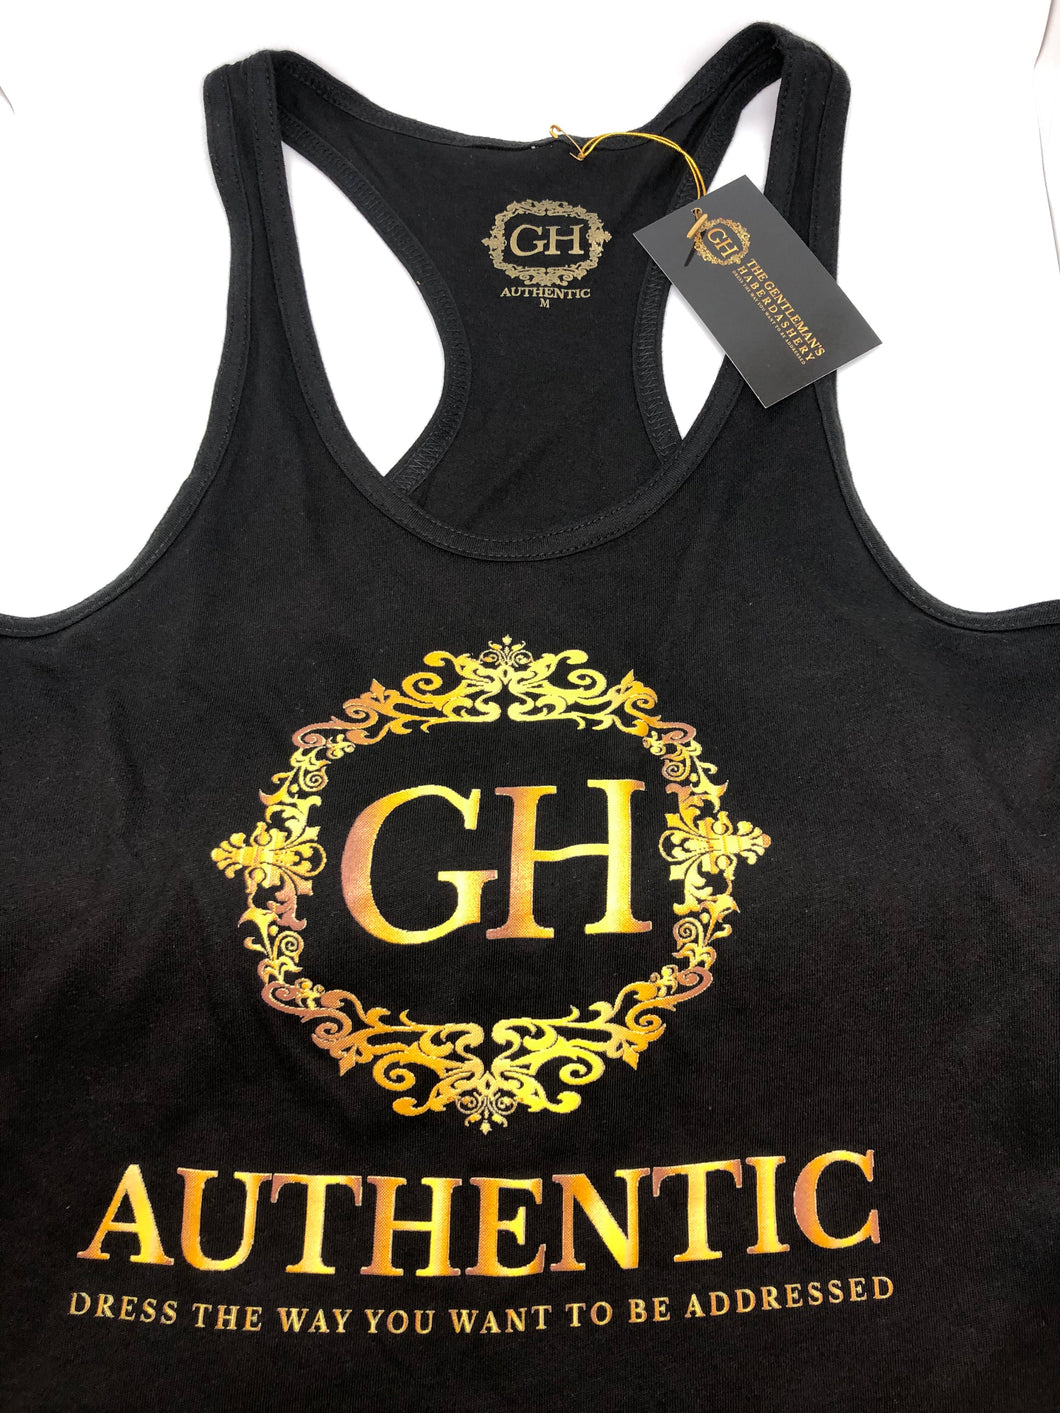 GH Authentic Women's Black Tank Top